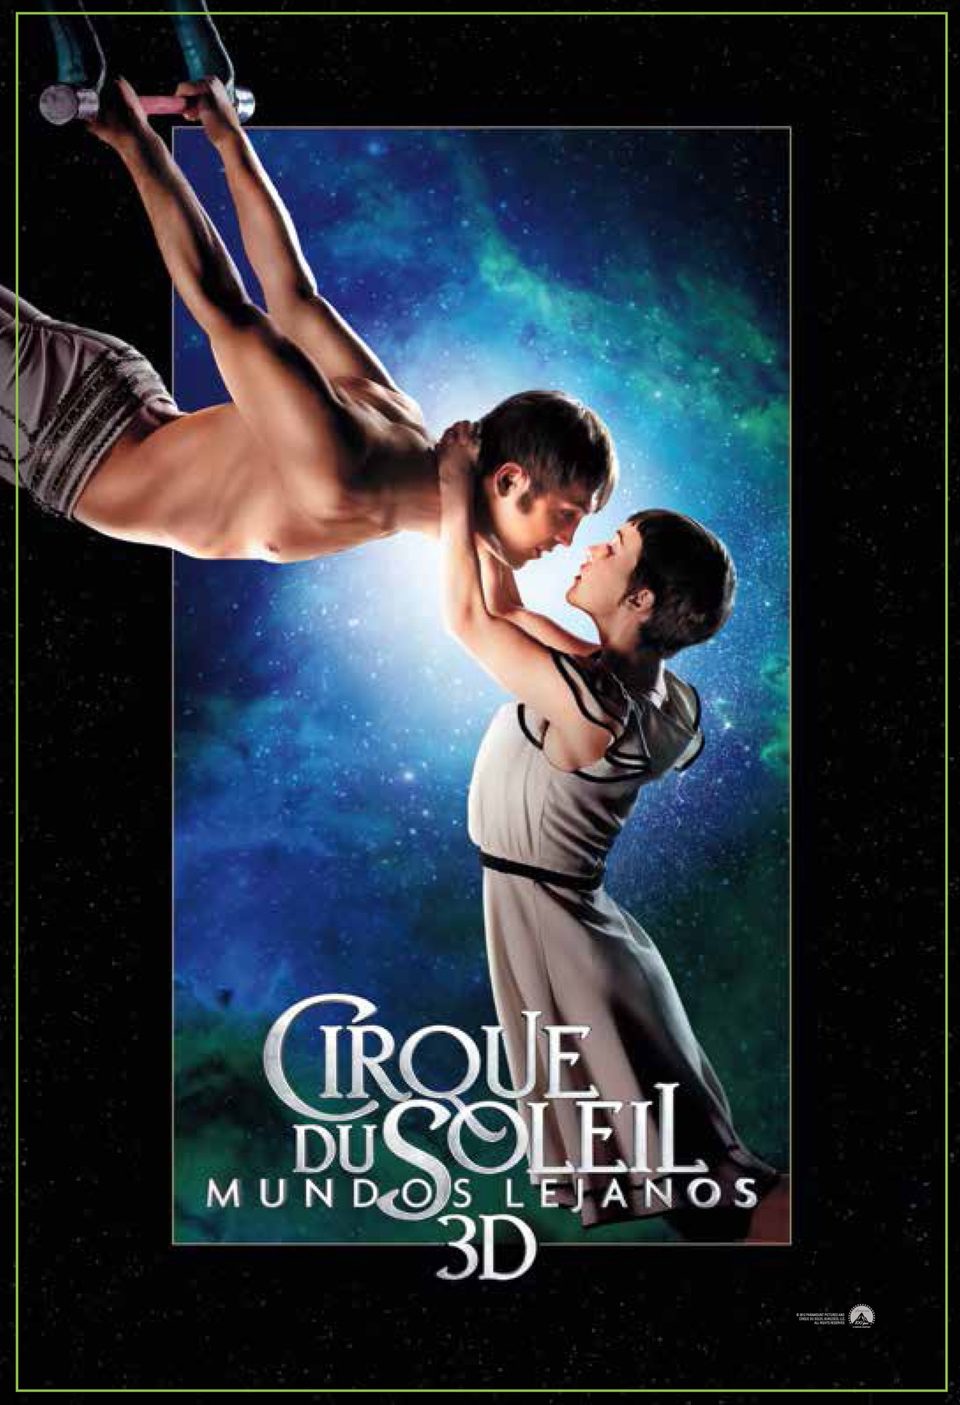 Cartel Teaser España de 'Cirque du Soleil: Mundos lejanos'